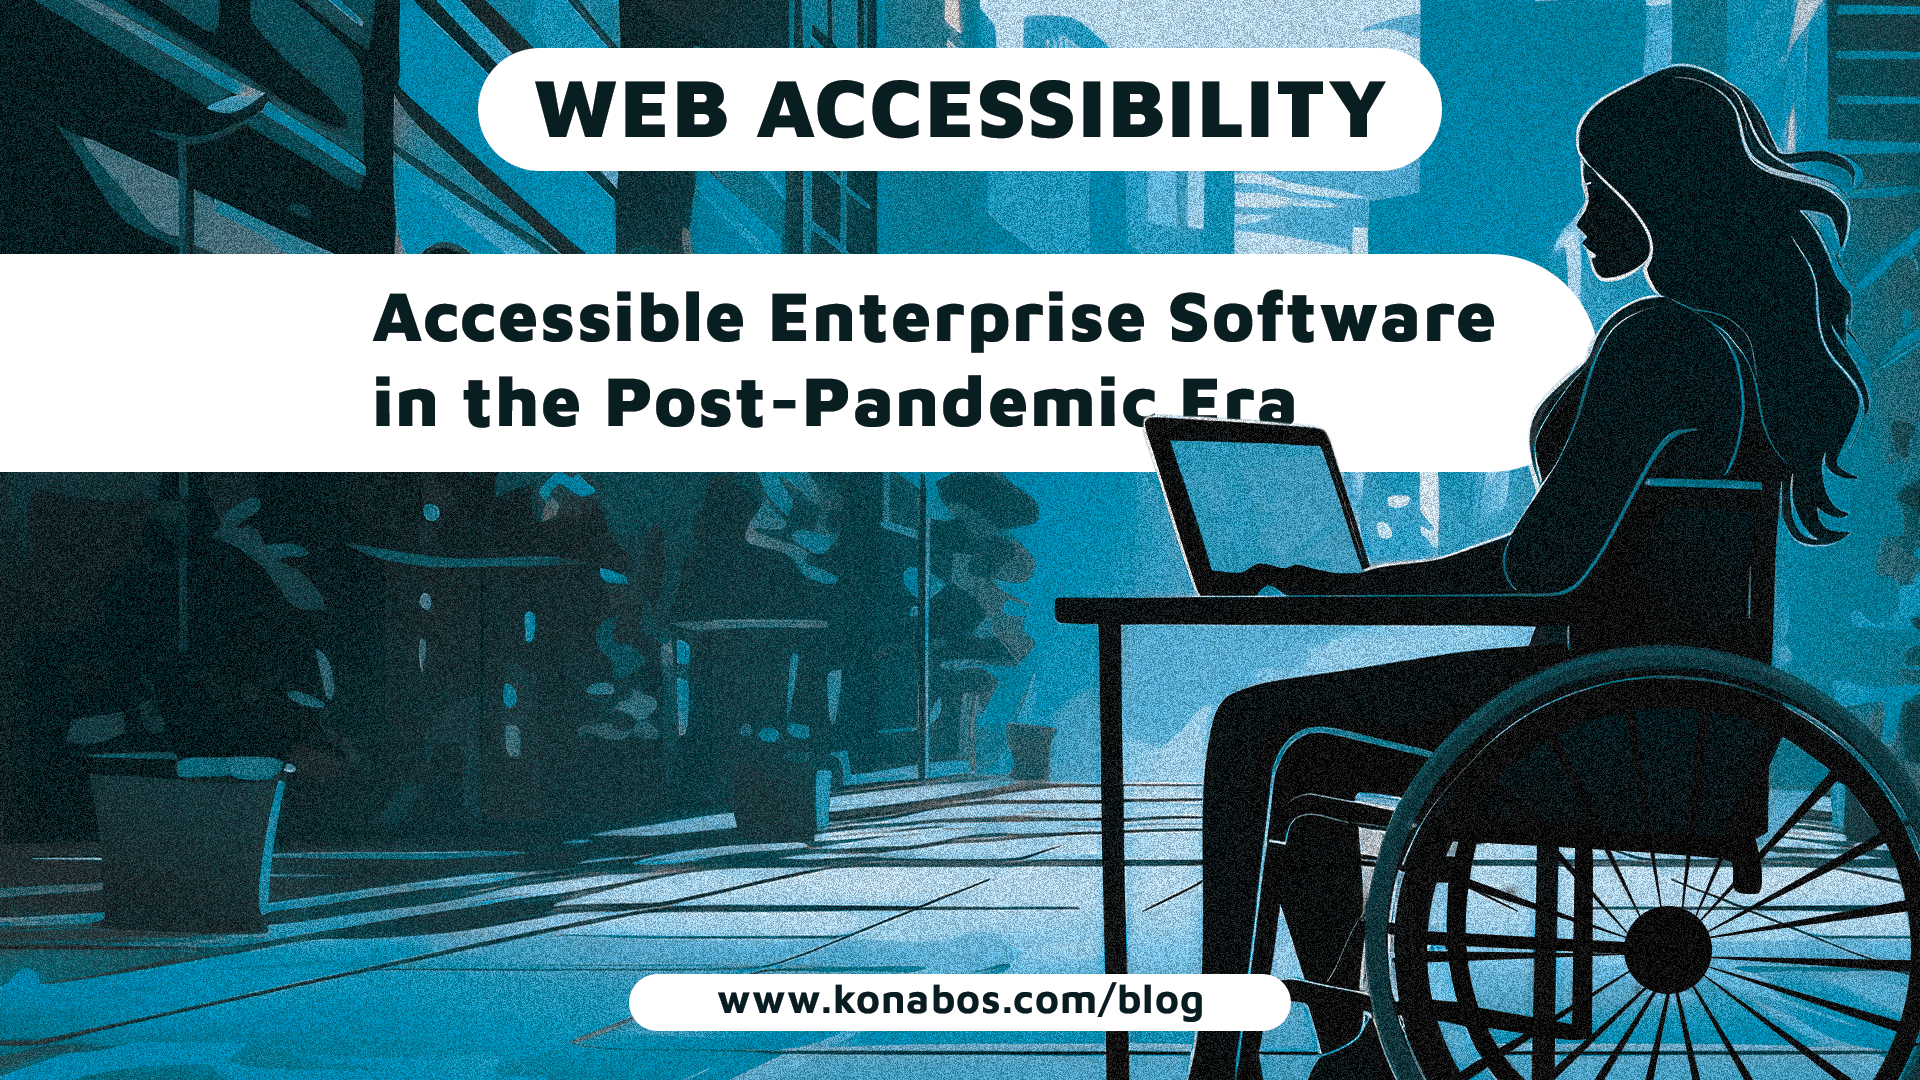 Web accessibility showcased through a woman in a wheelchair accessing the web through a laptop.